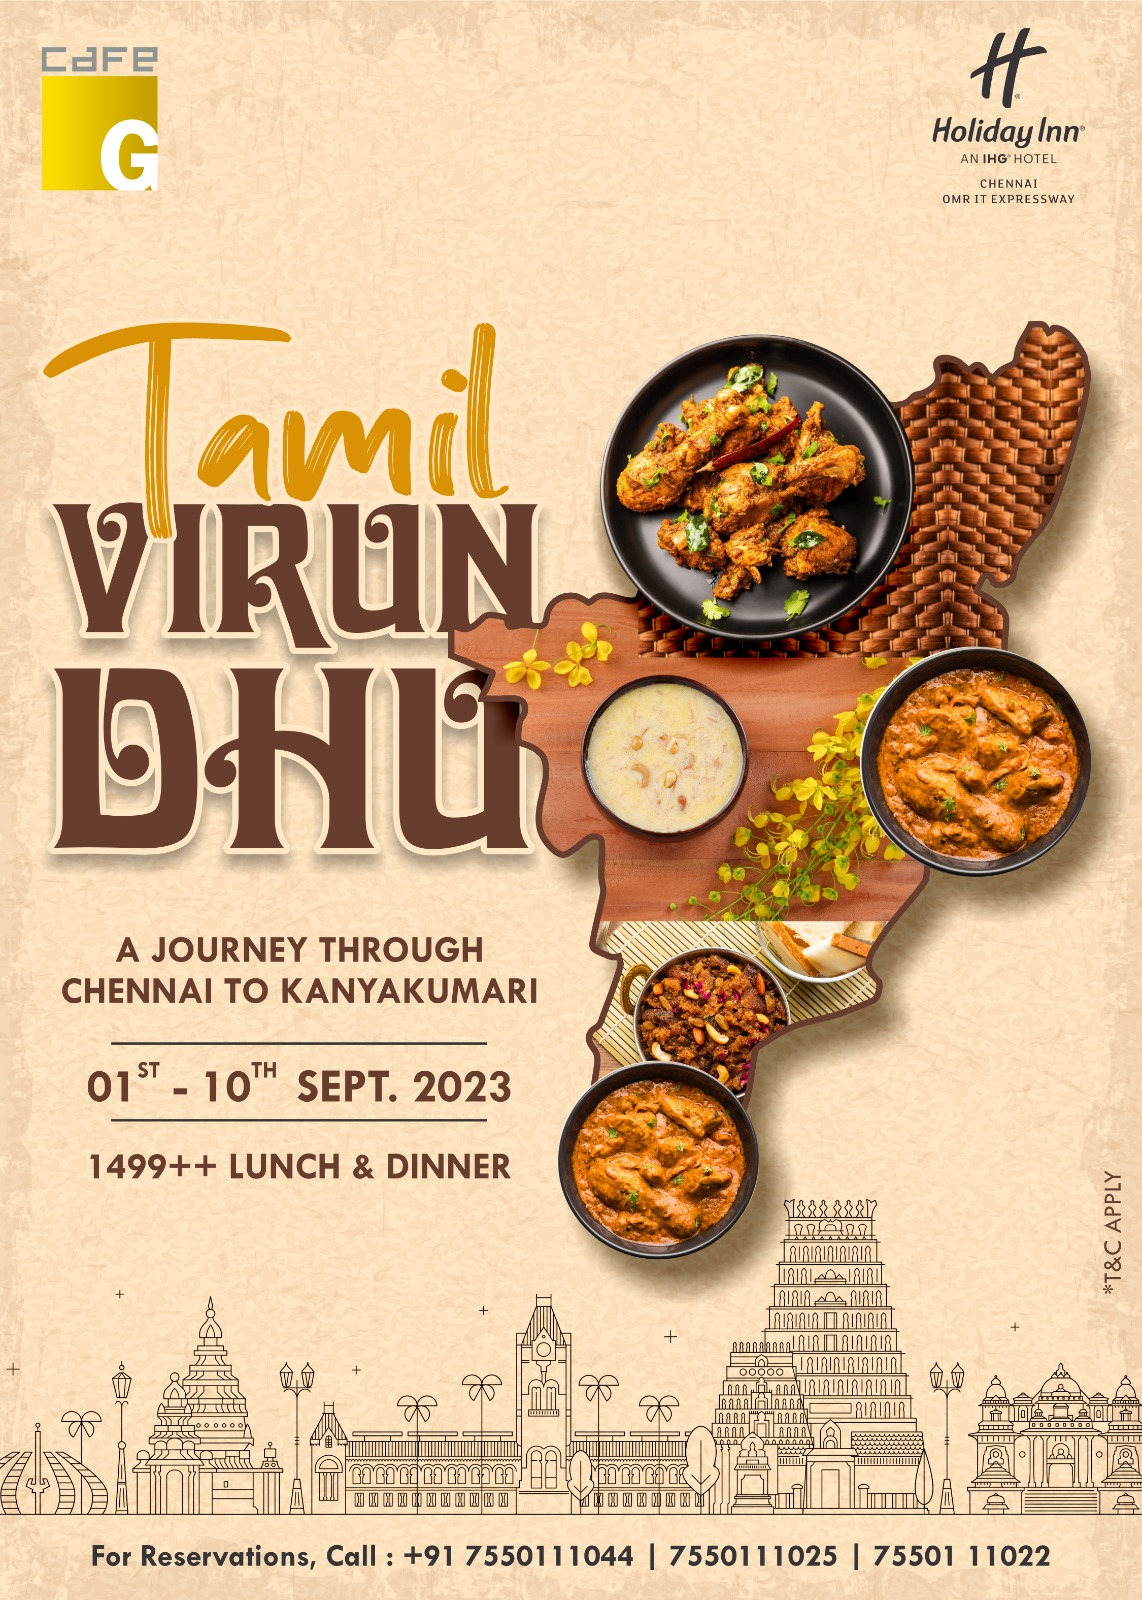 *Savour the Flavours of Tamil Nadu at Café G: Hotel Holiday Inn's "Tamil Virundhu" Food Festival